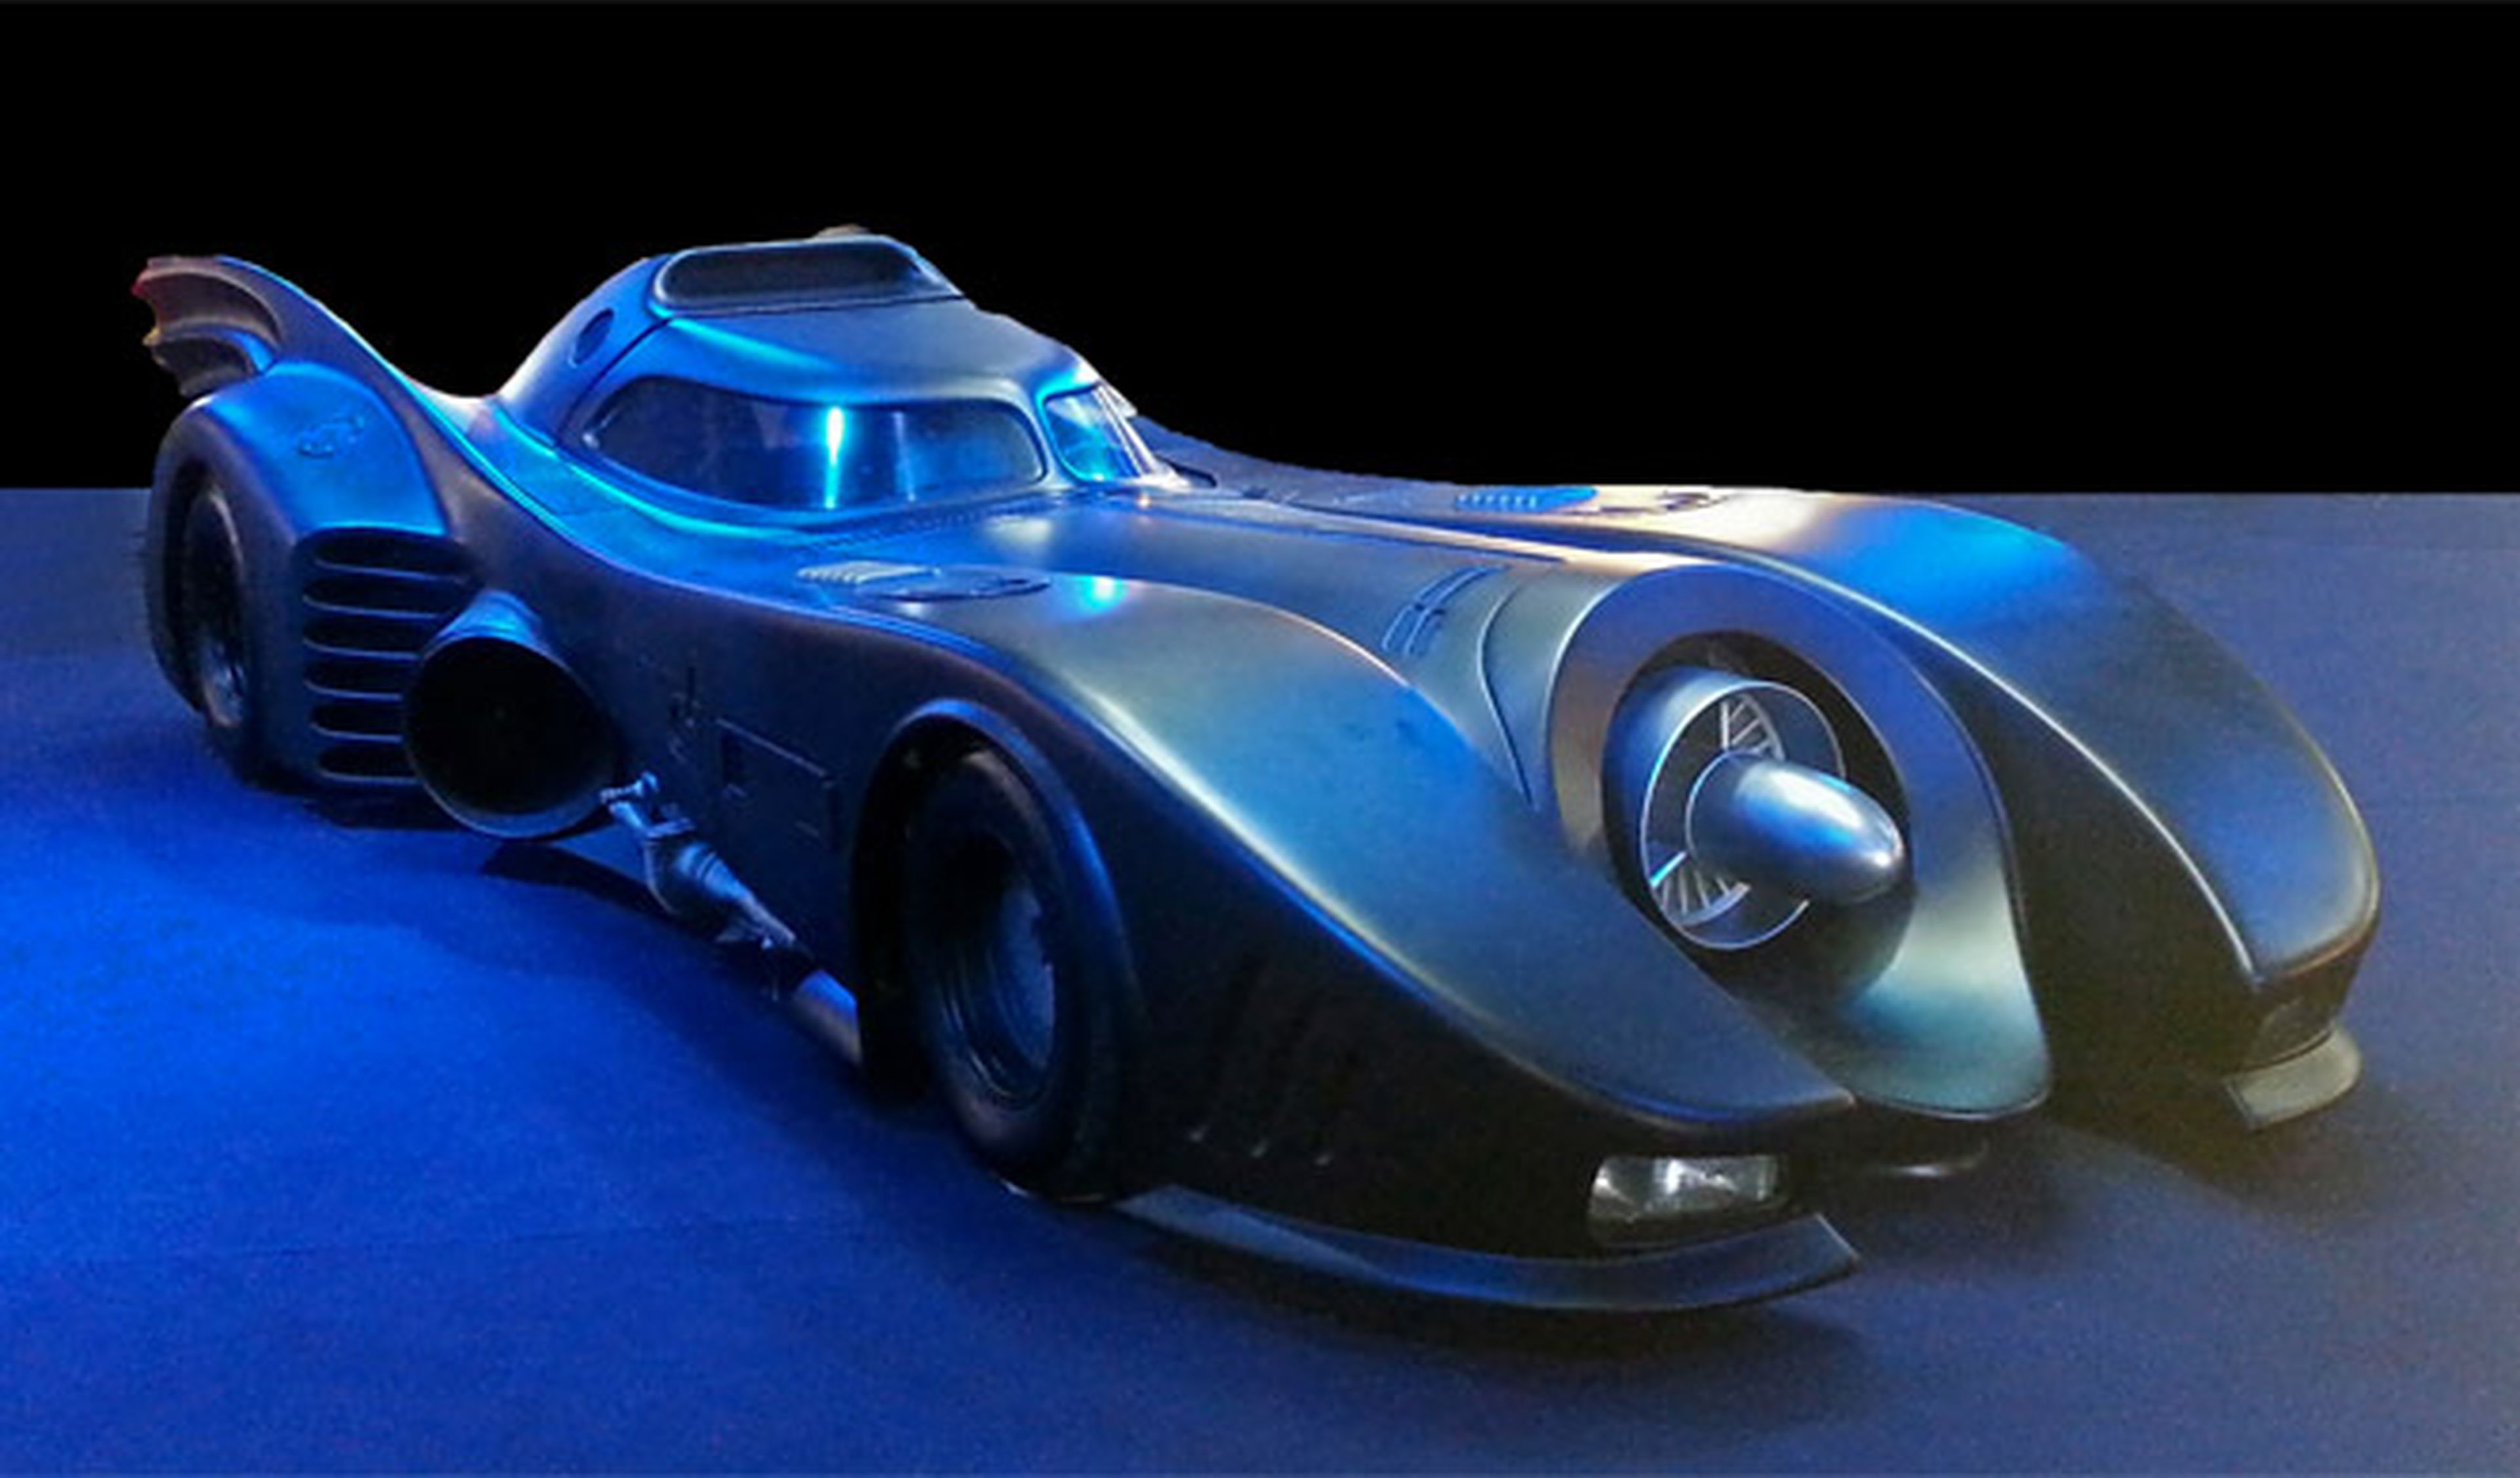 Crean una réplica de Batmóvil basada en el Mercedes Clase S